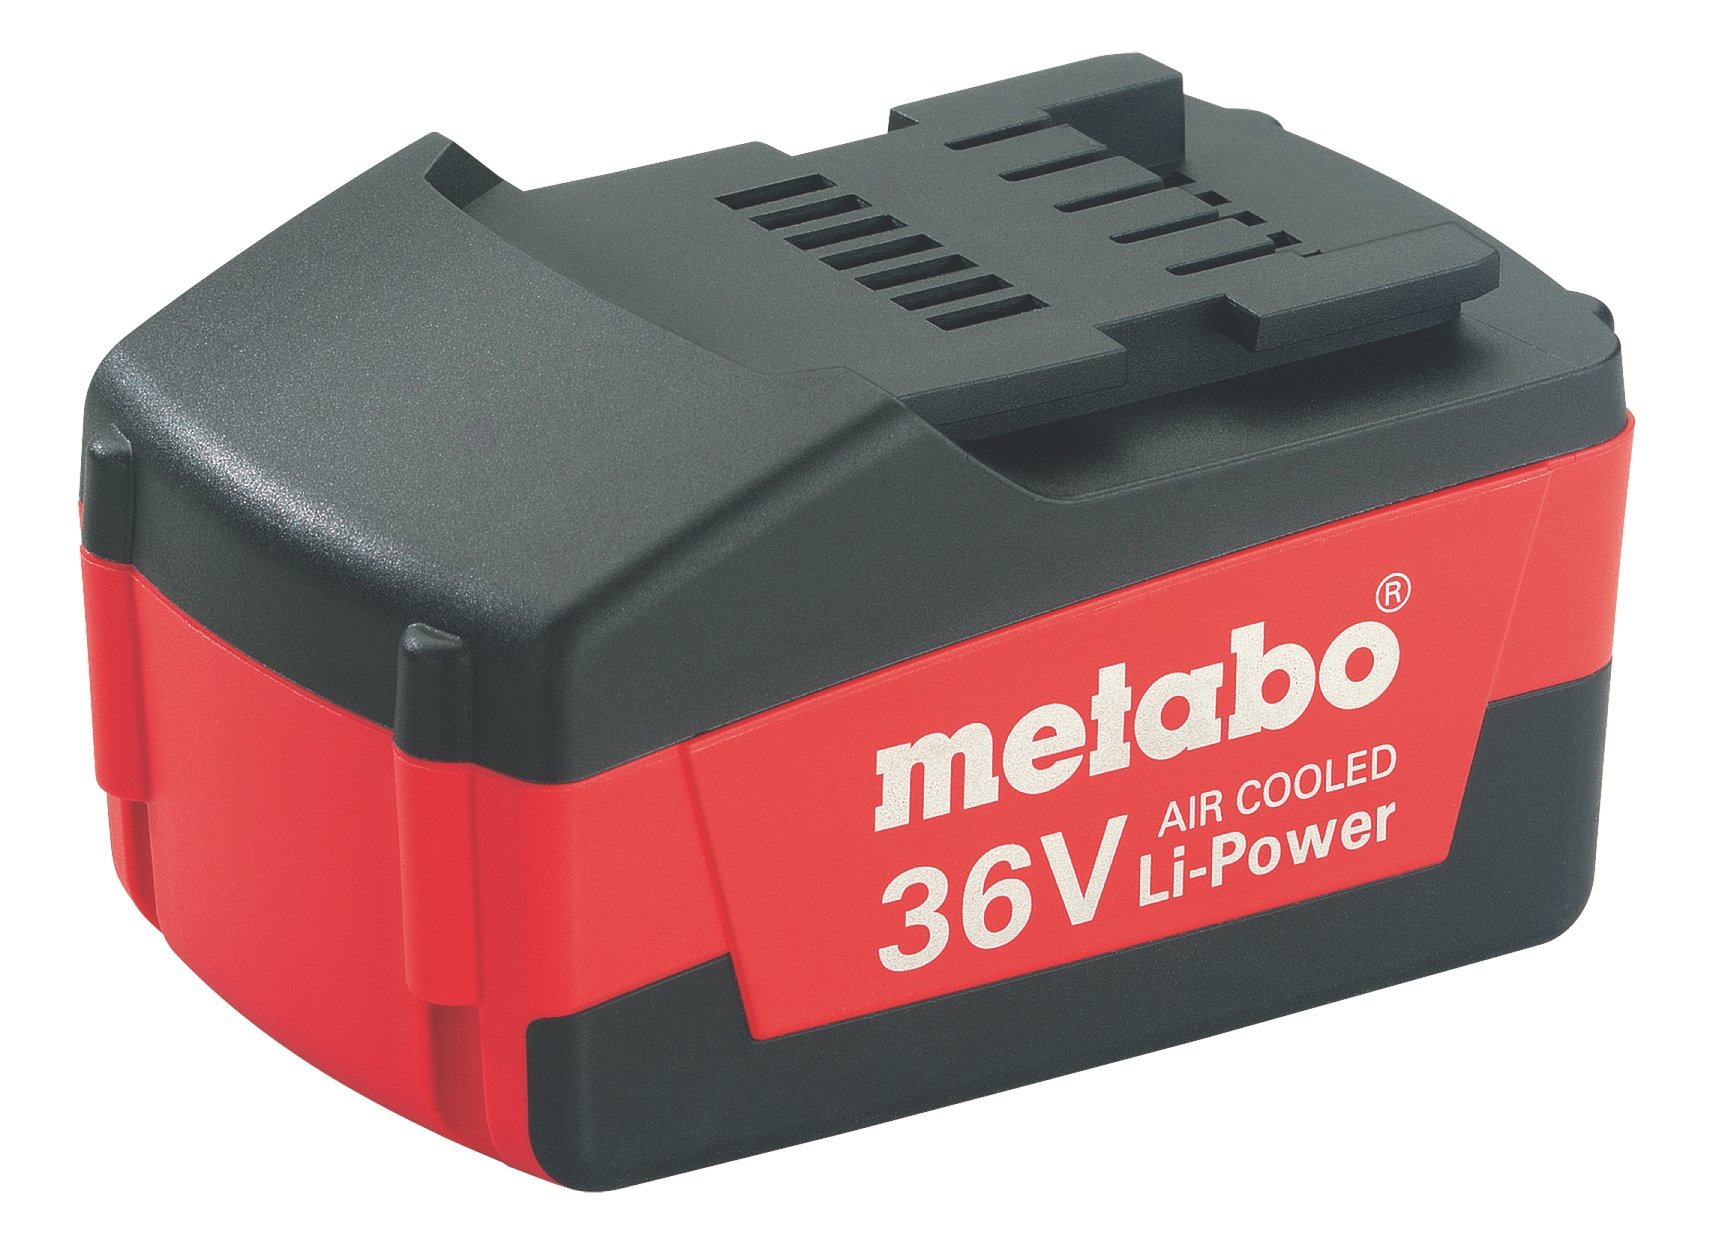 Metabo Akkupack 36 V, 1,5 Ah, Li-Power Compact, "AIR COOLED" (625453000) Spannung des Akkupacks: 36 V, Akkukapazität: 1.5 Ah, Gewicht: 690 g